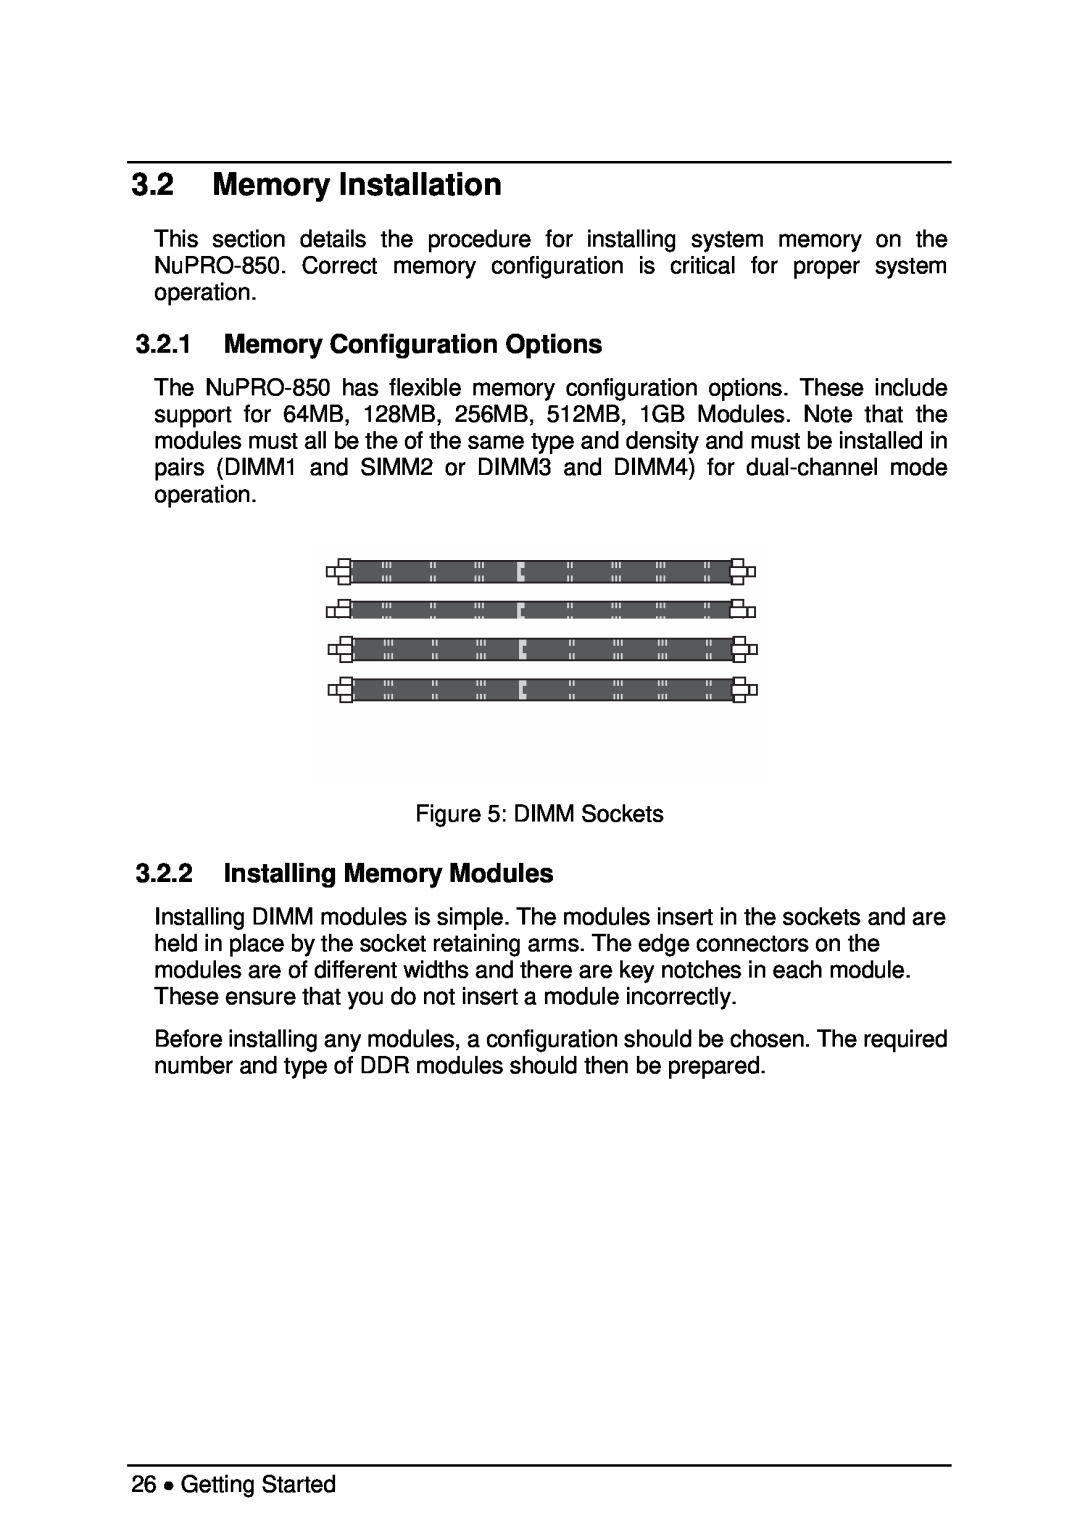 Intel NuPRO-850 user manual Memory Installation, Memory Configuration Options, Installing Memory Modules 